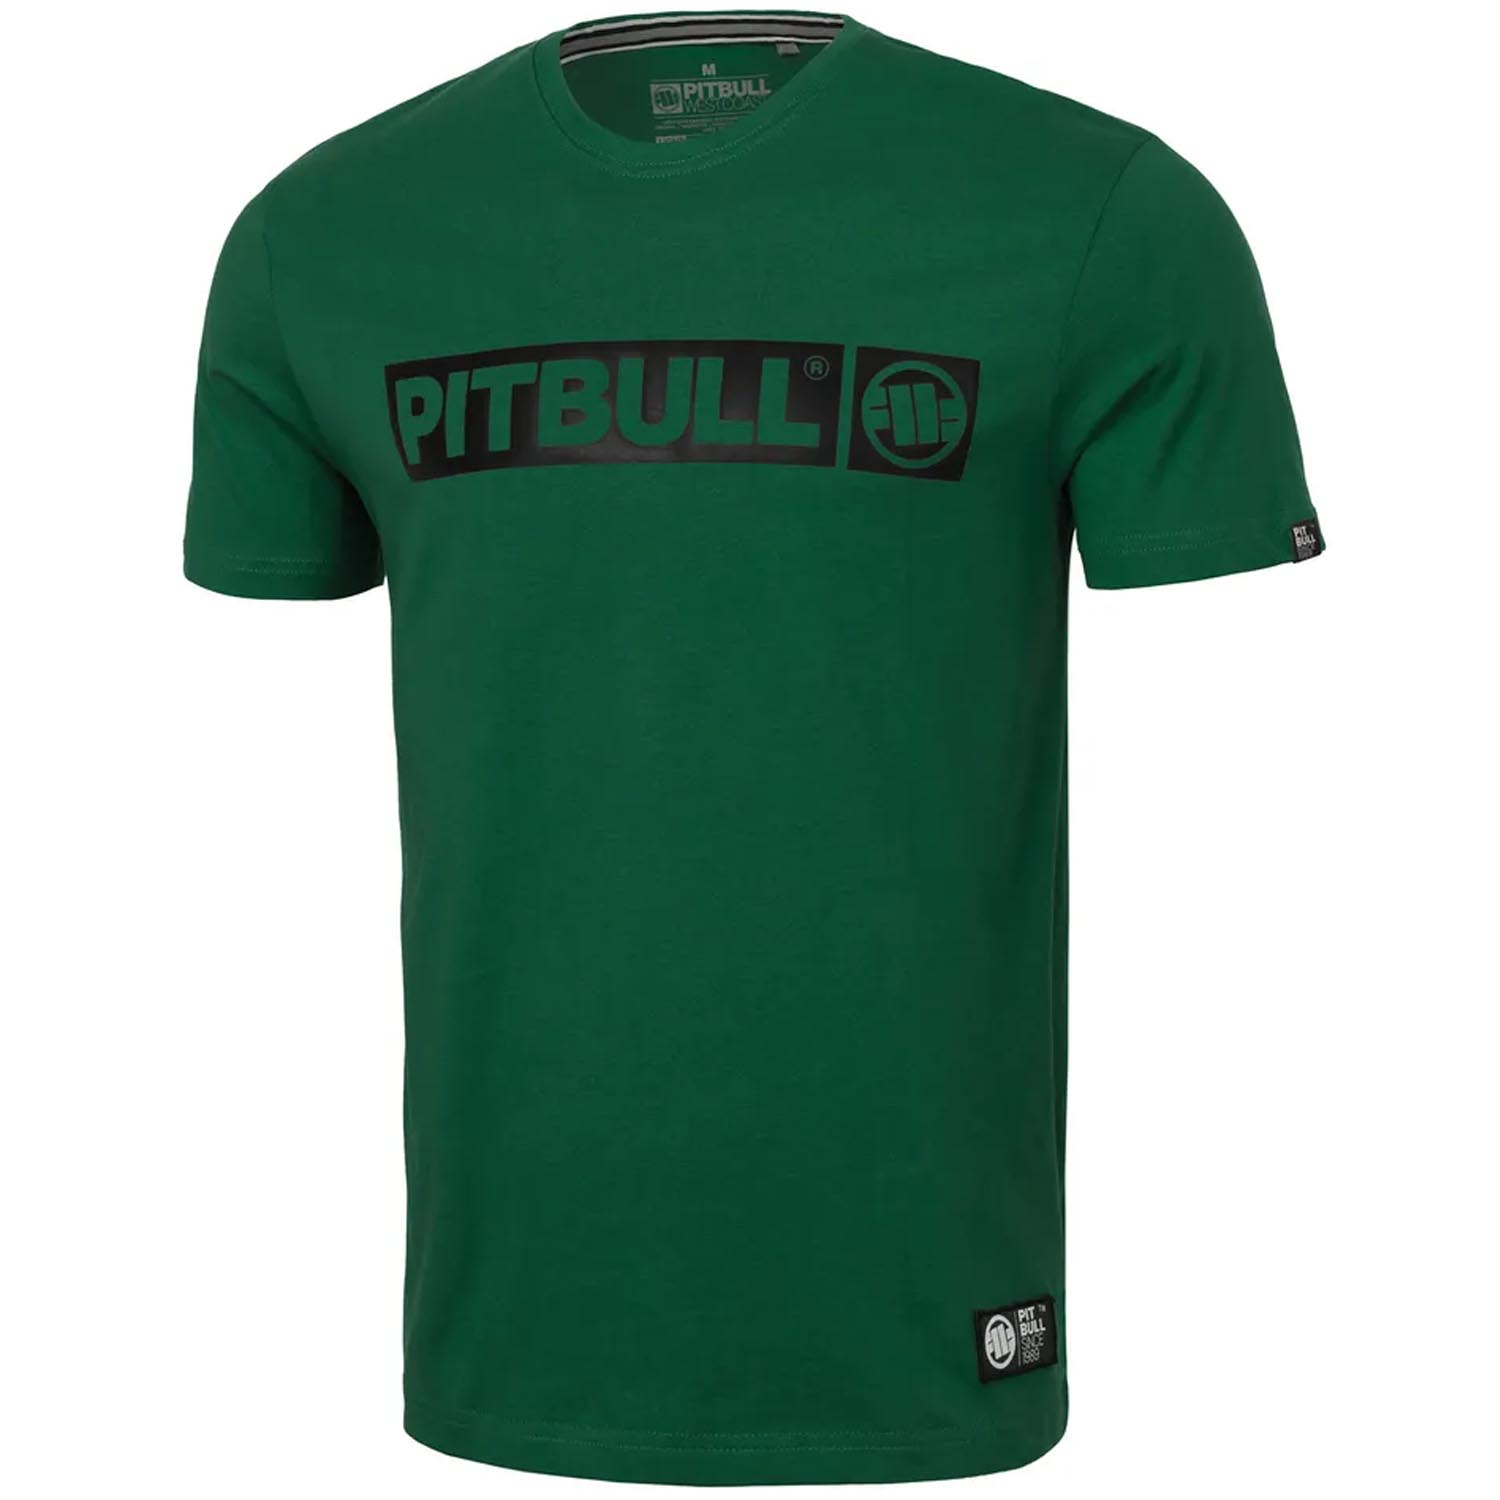 Pit Bull West Coast T-Shirtt, Hilltop S70, leaf green